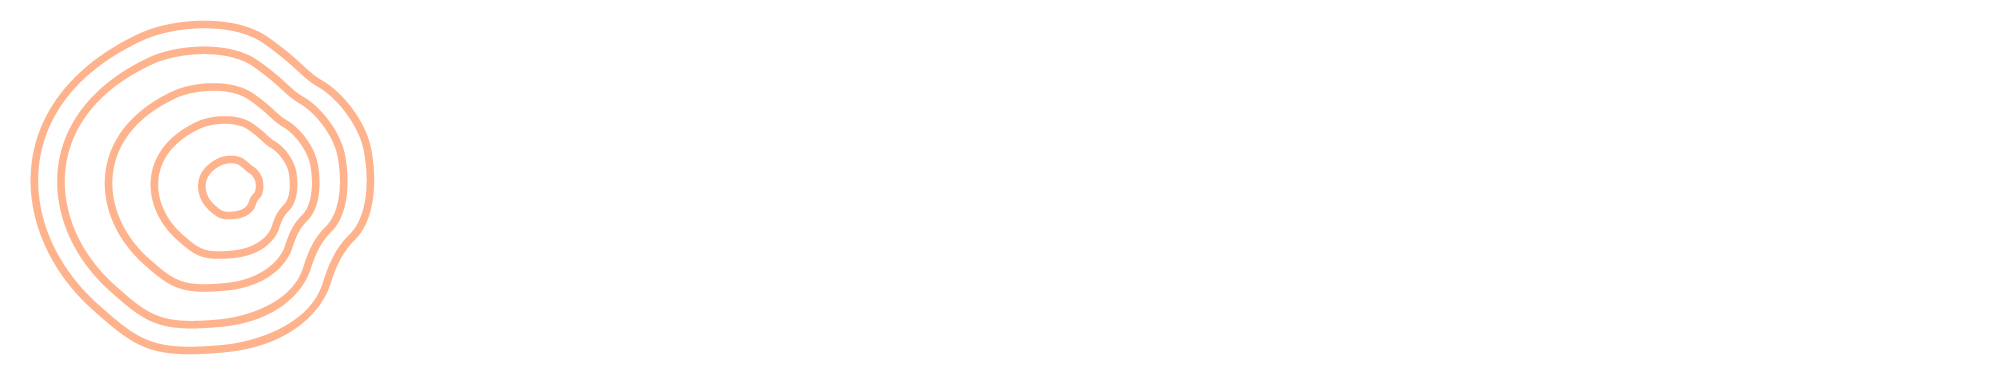 Grums Begravningsbyrå logotyp vit